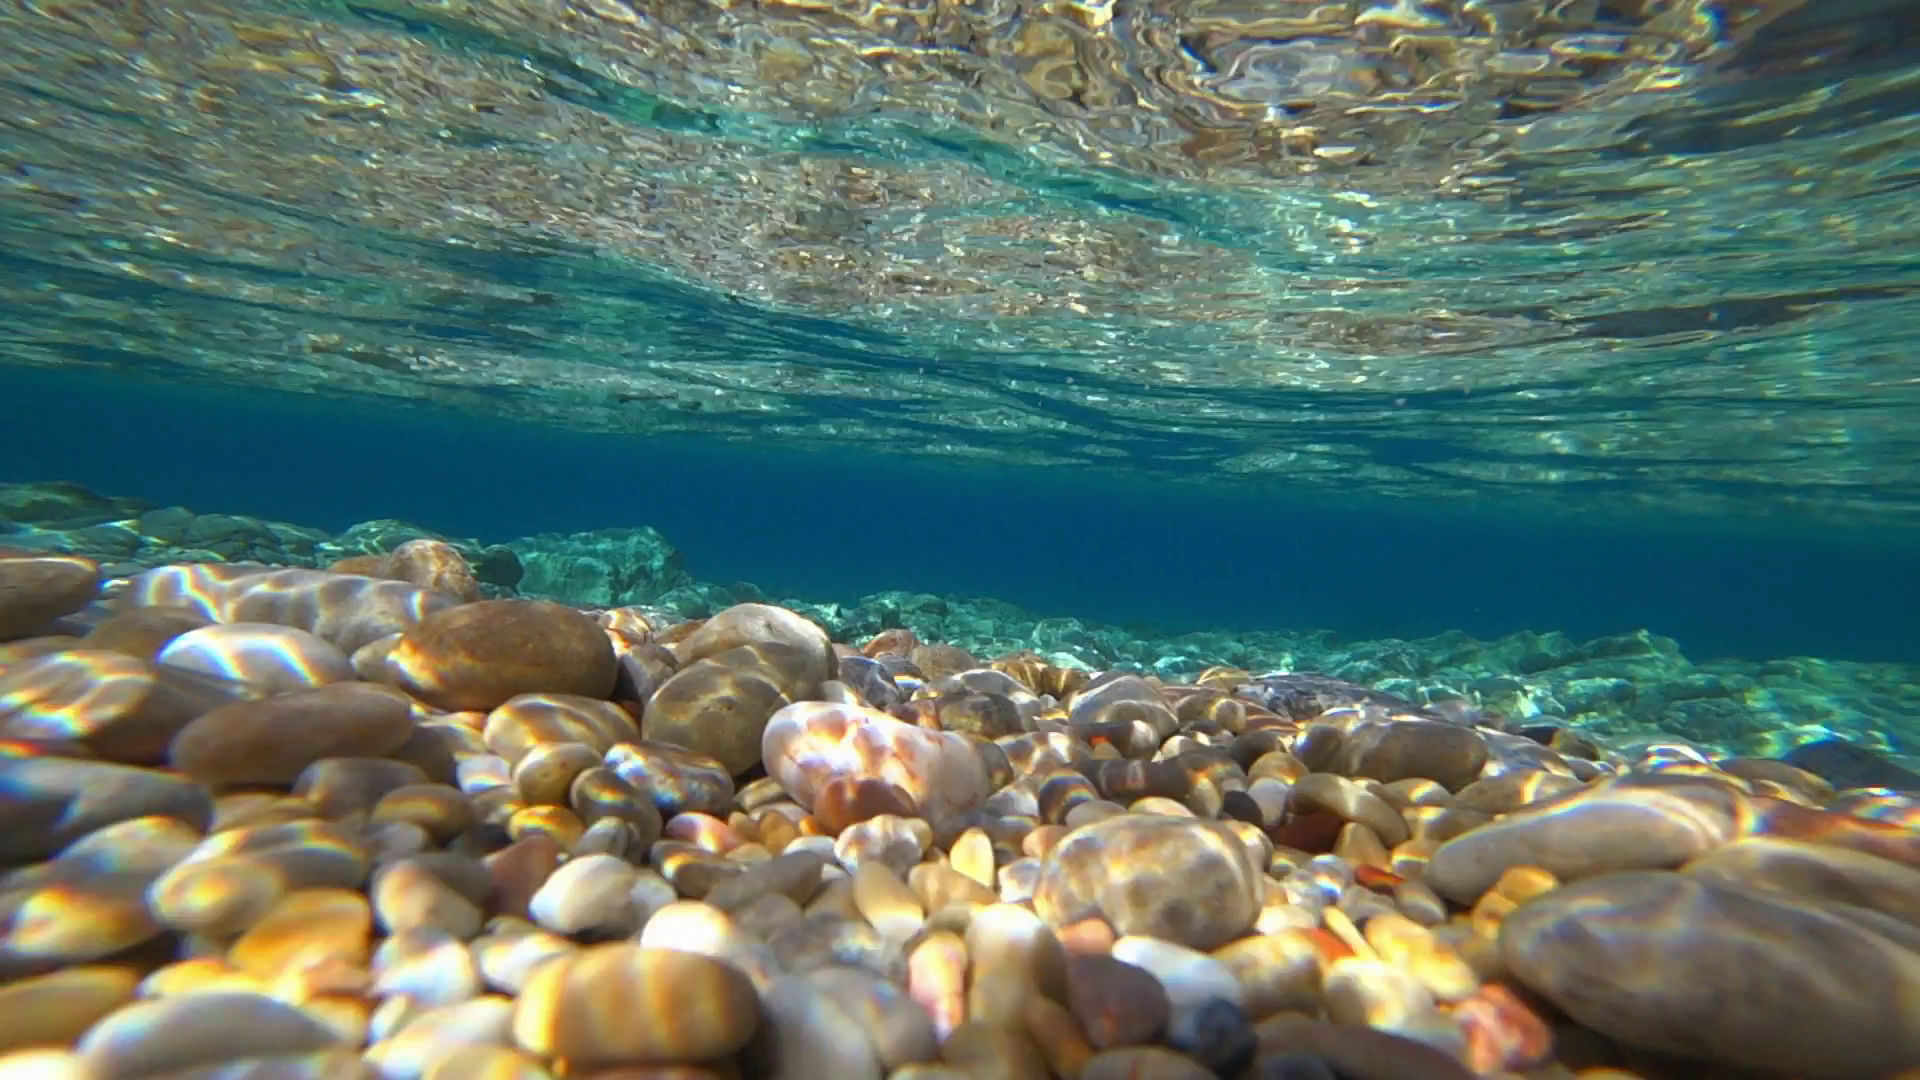 Underwater Ocean Scene View With Colored Stones Stock